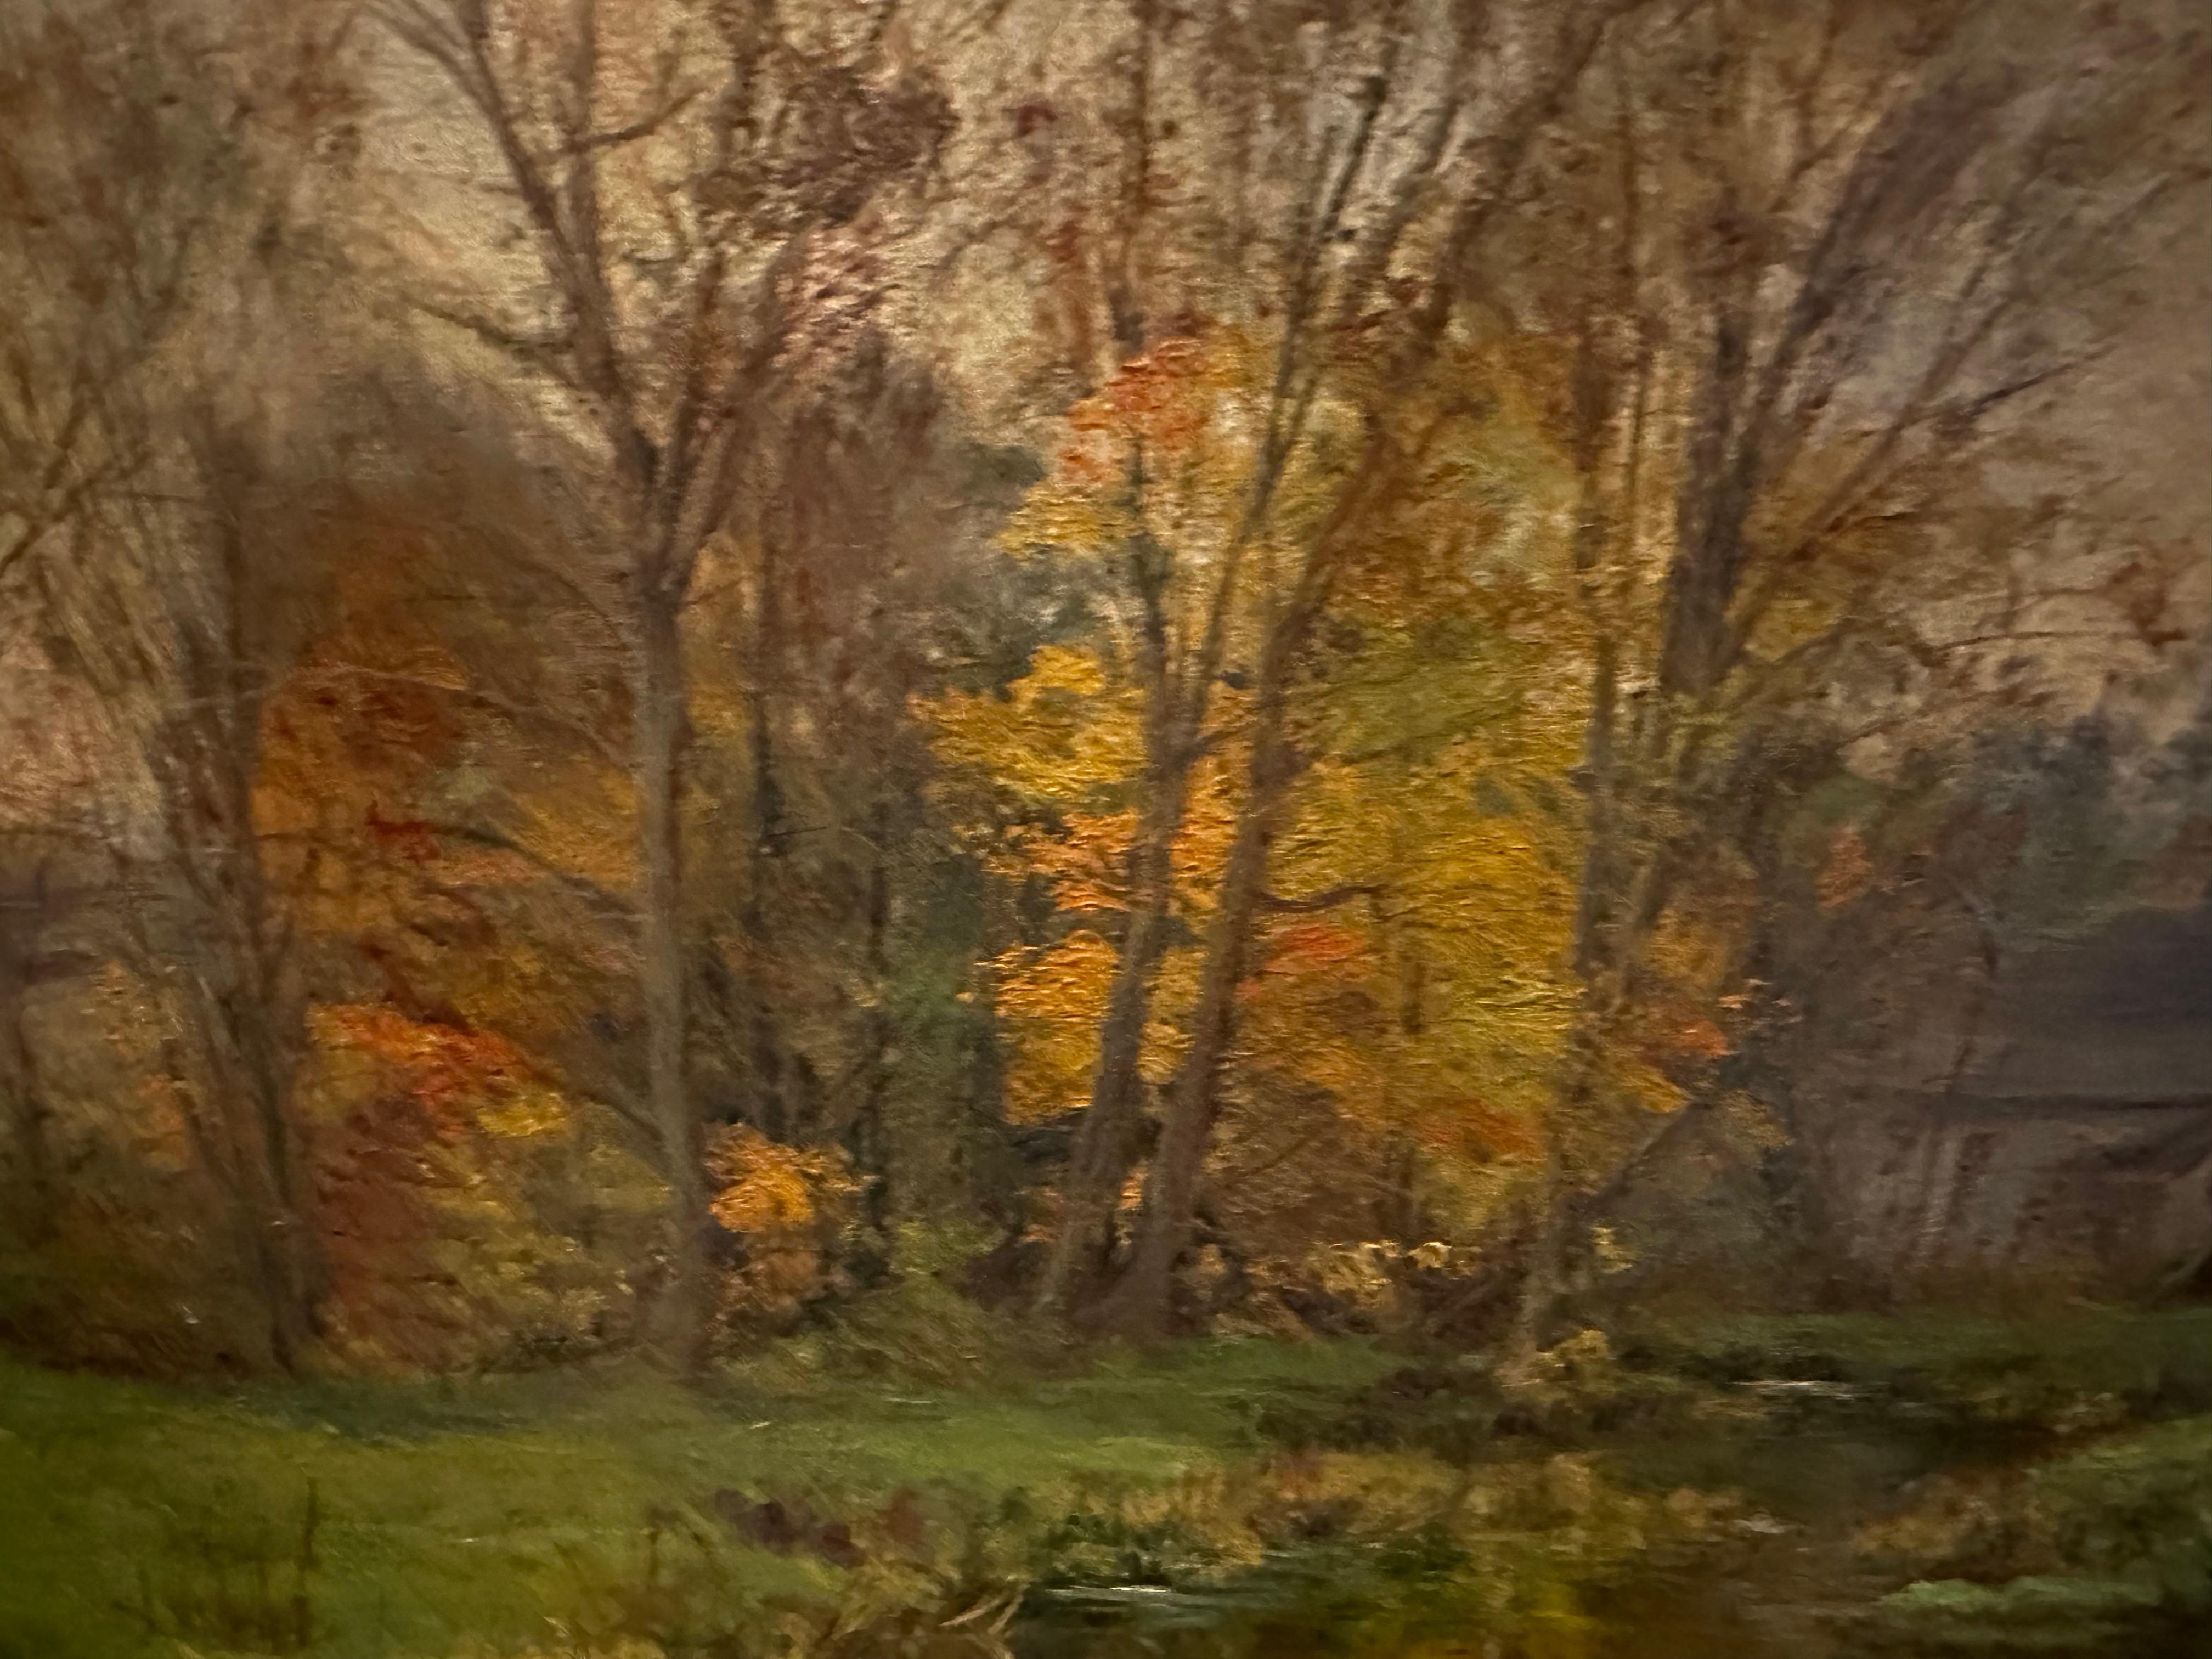 Stunning Olive Parker Black (1868-1948) landscape painting.  Oil on canvas in antique gold frame. 
Signed lower left.  Name inscription plaque on stretcher.  
27.5” X 21.5” including frame
20X 14” just painting 

Provenance: 
Private residence, NJ